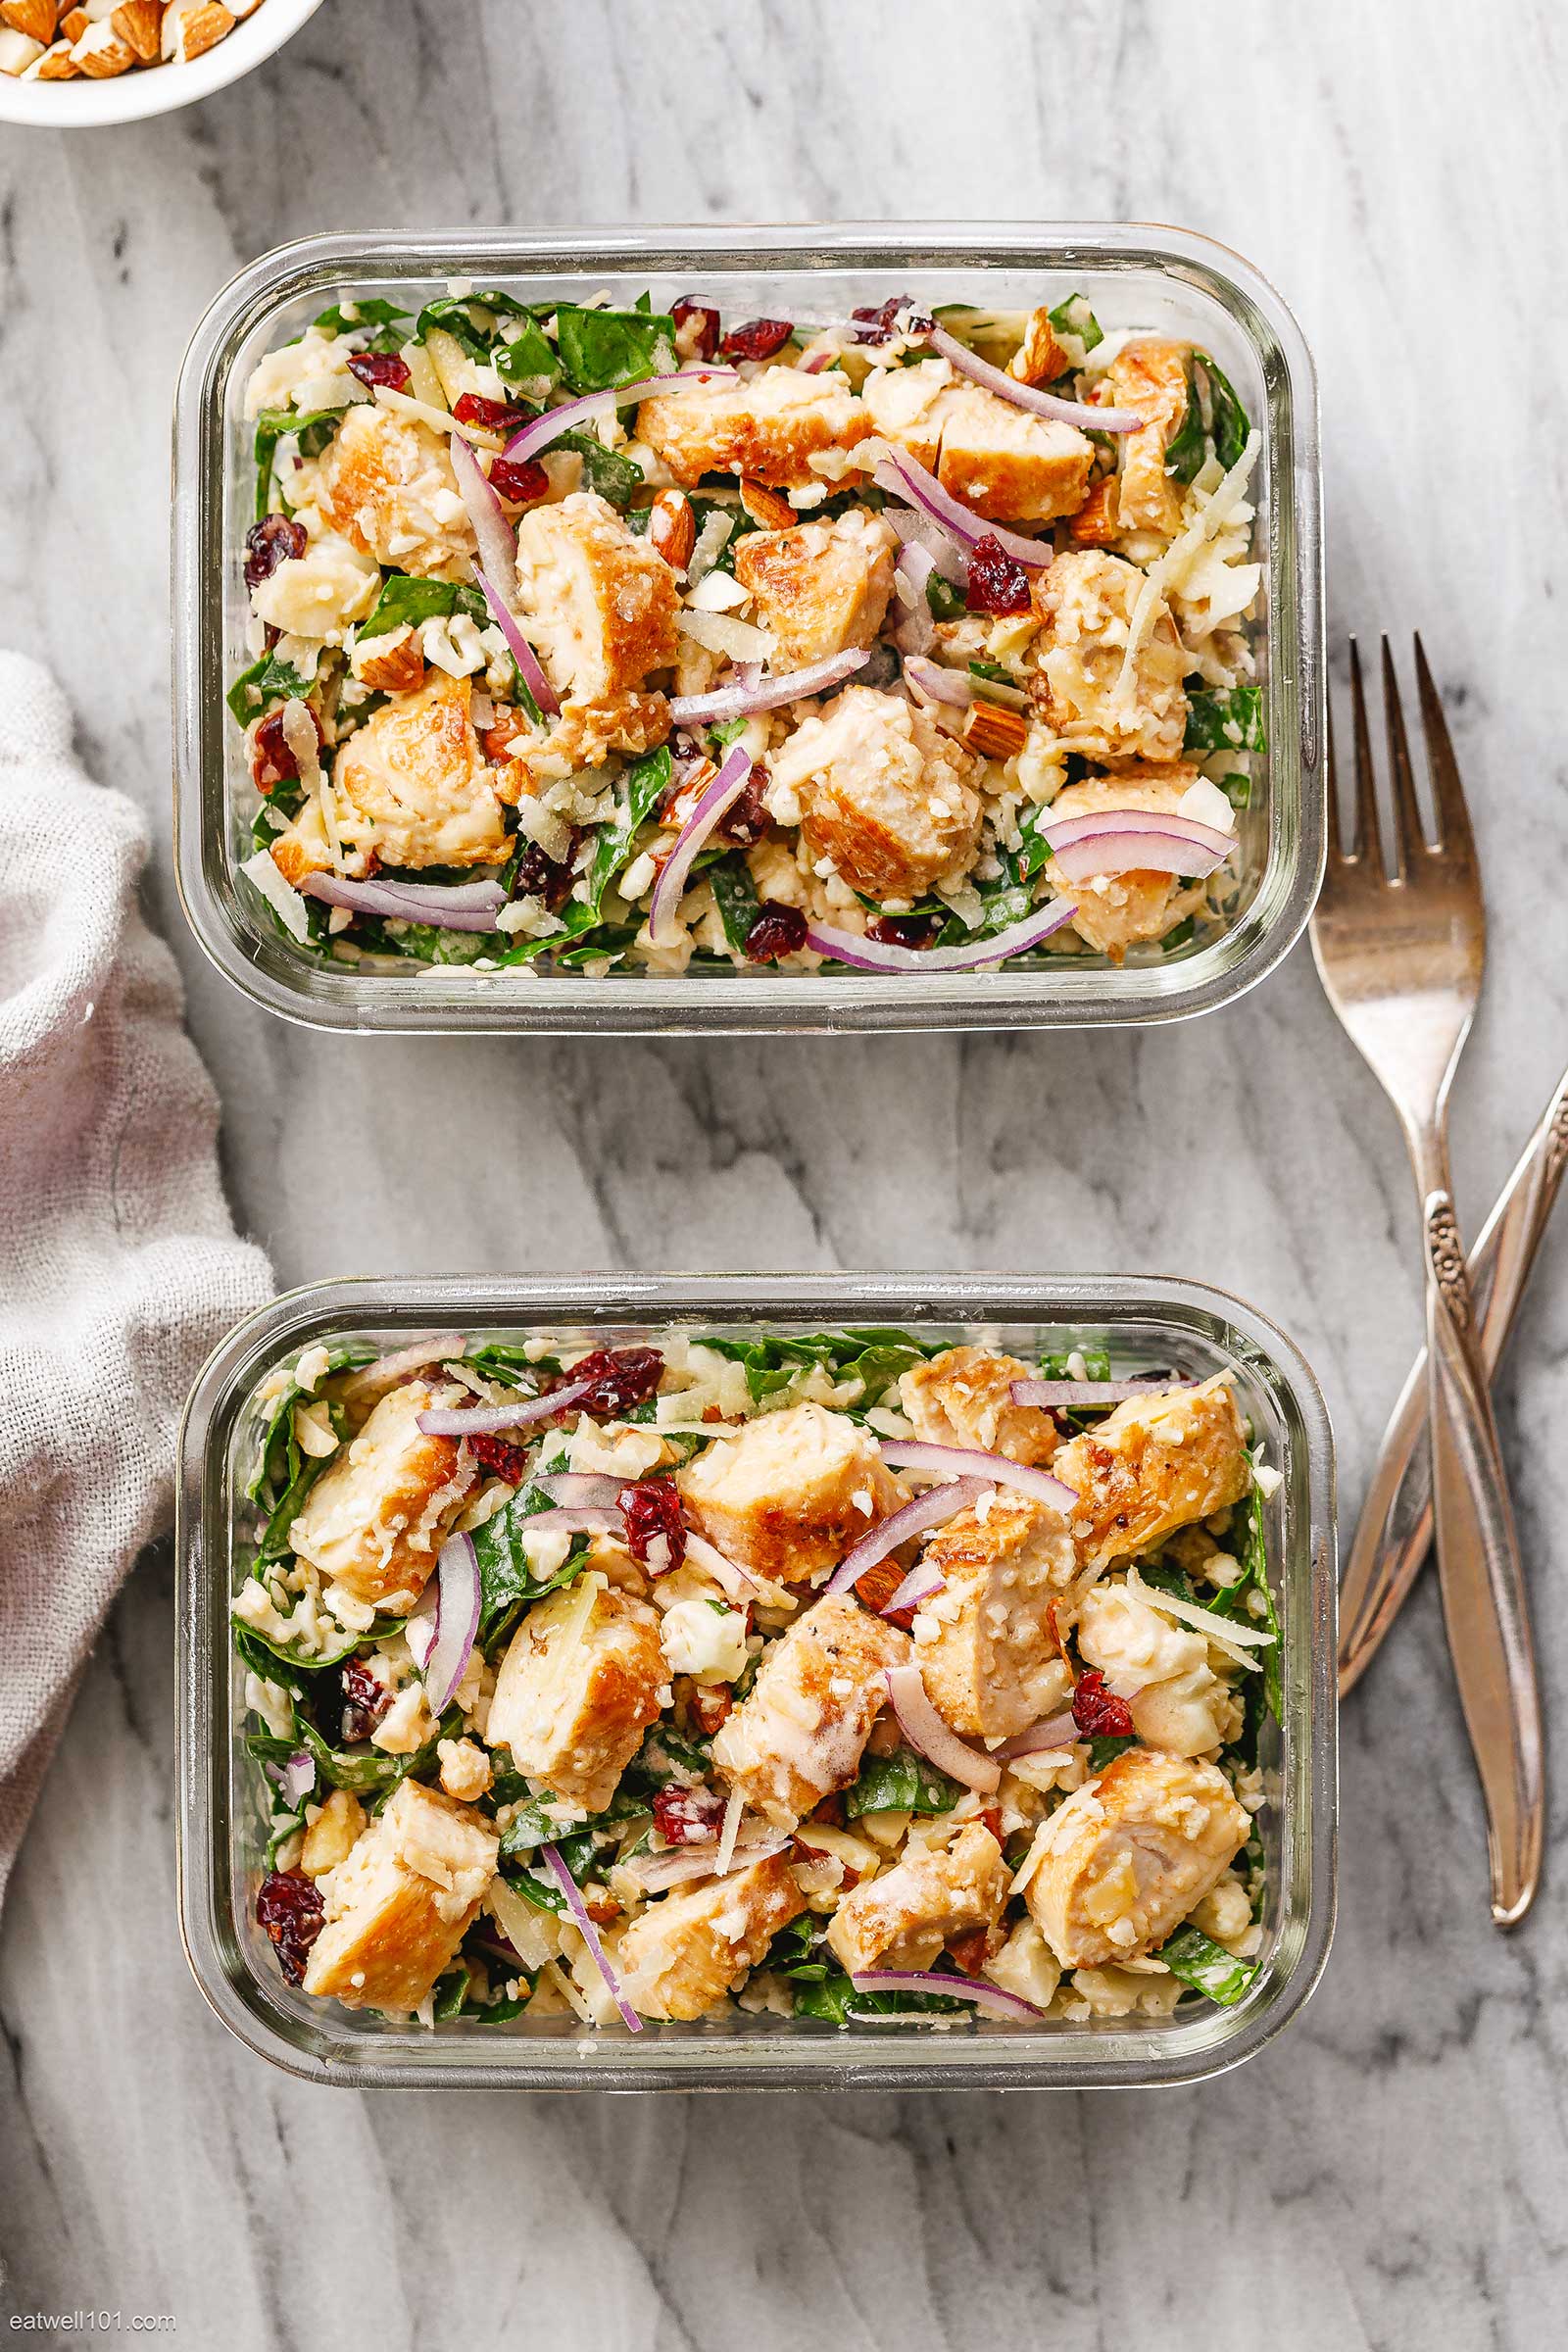 https://www.eatwell101.com/wp-content/uploads/2020/01/chicken-meal-prep-salad-recipe-1.jpg